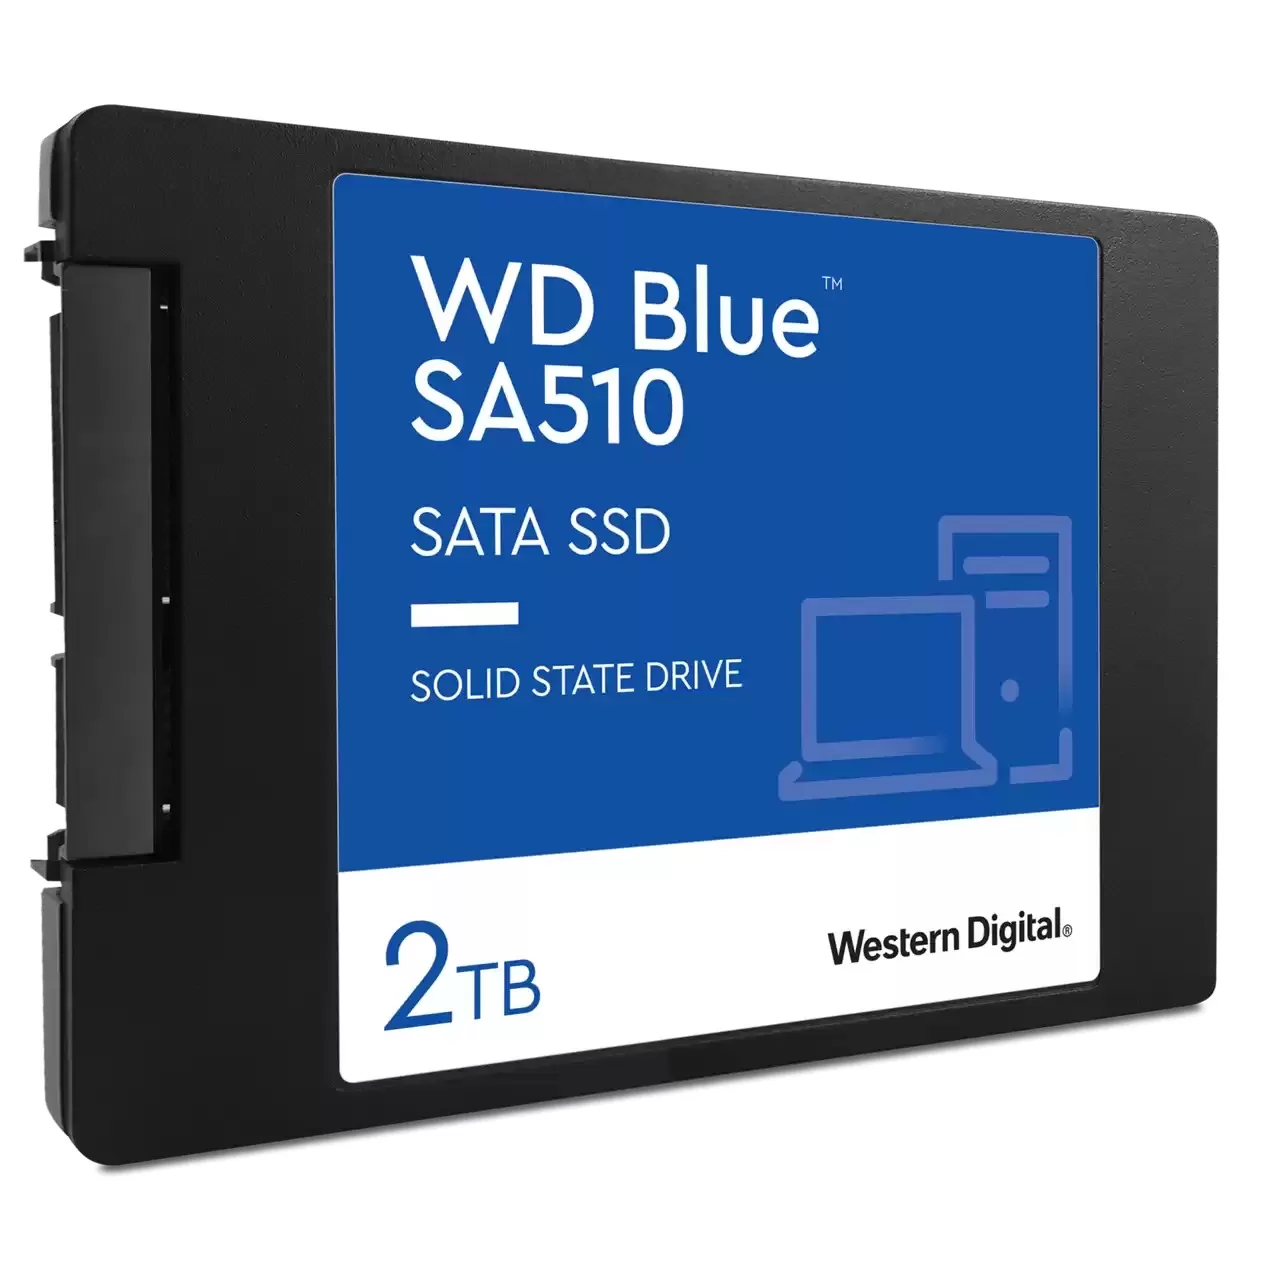 Hard disk ssd western digital wd blue sa510 2tb 2.5